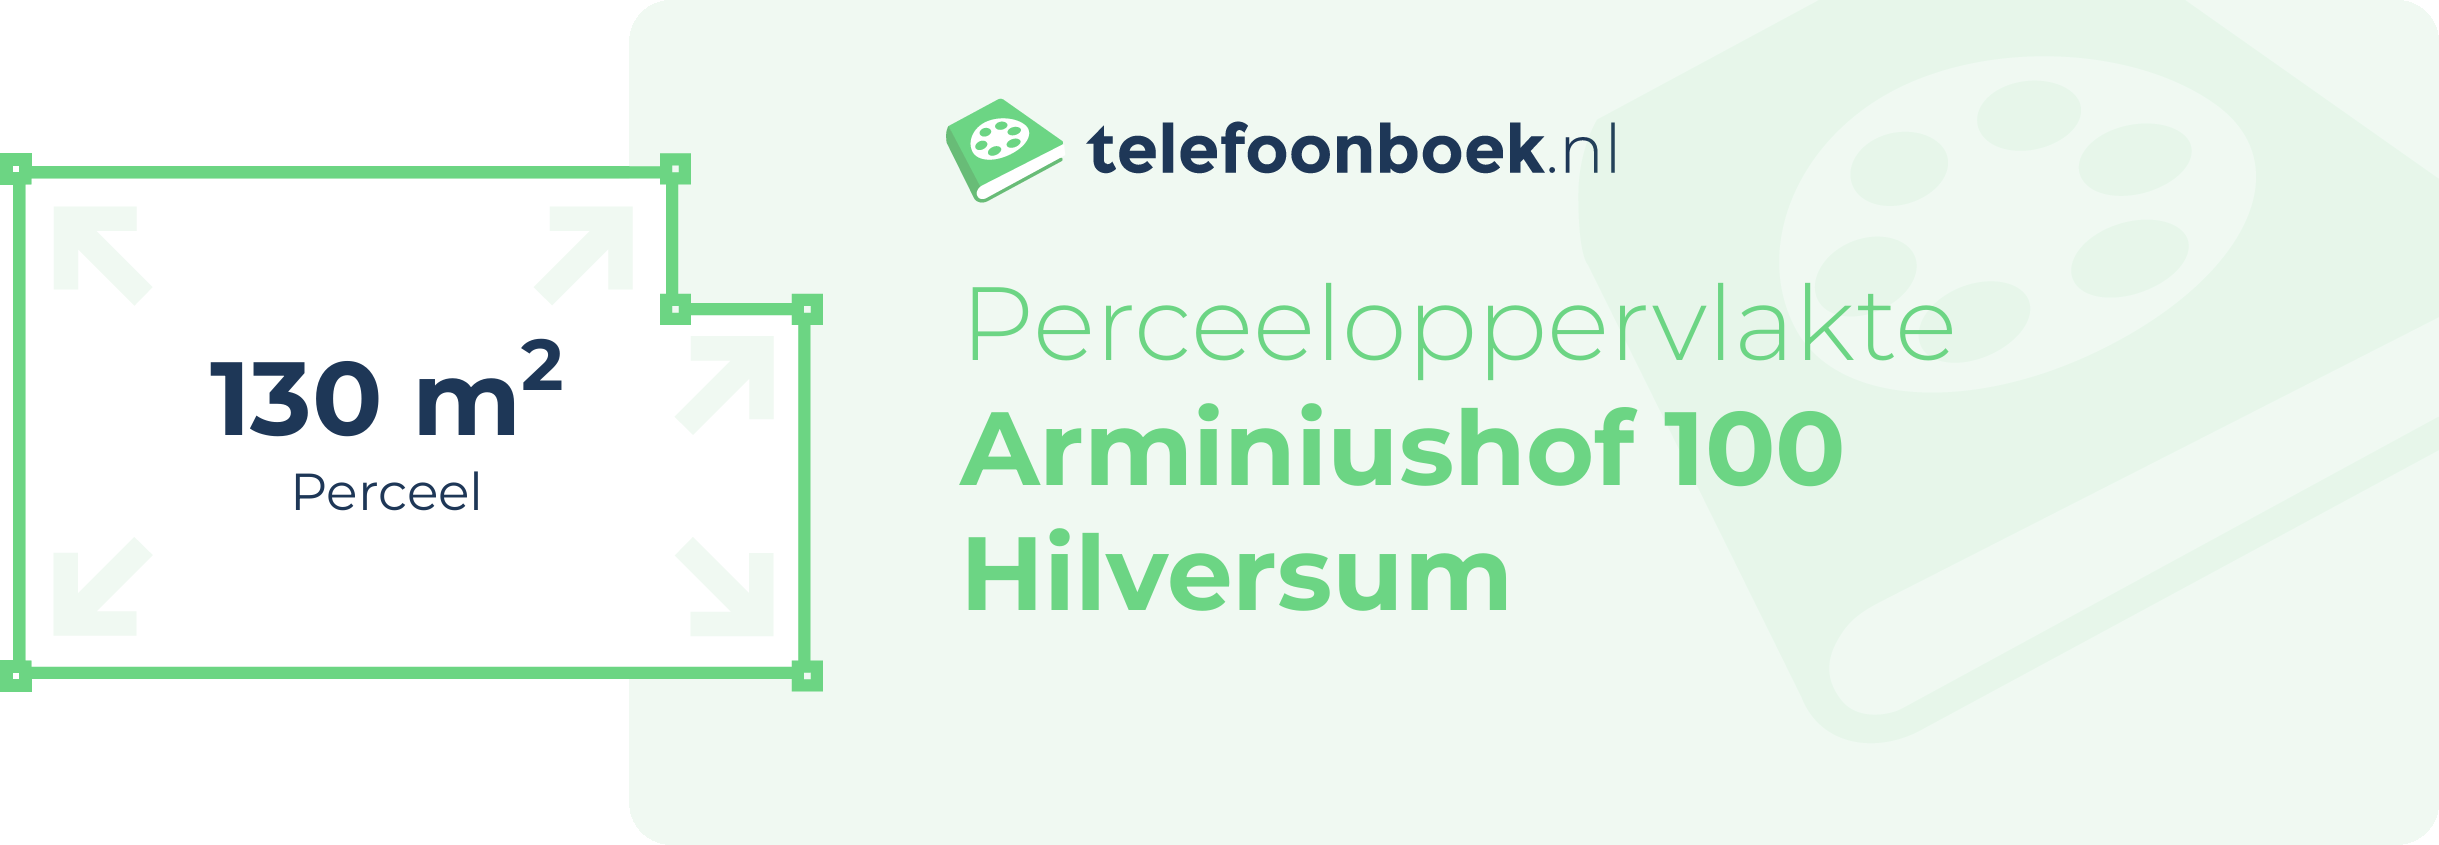 Perceeloppervlakte Arminiushof 100 Hilversum